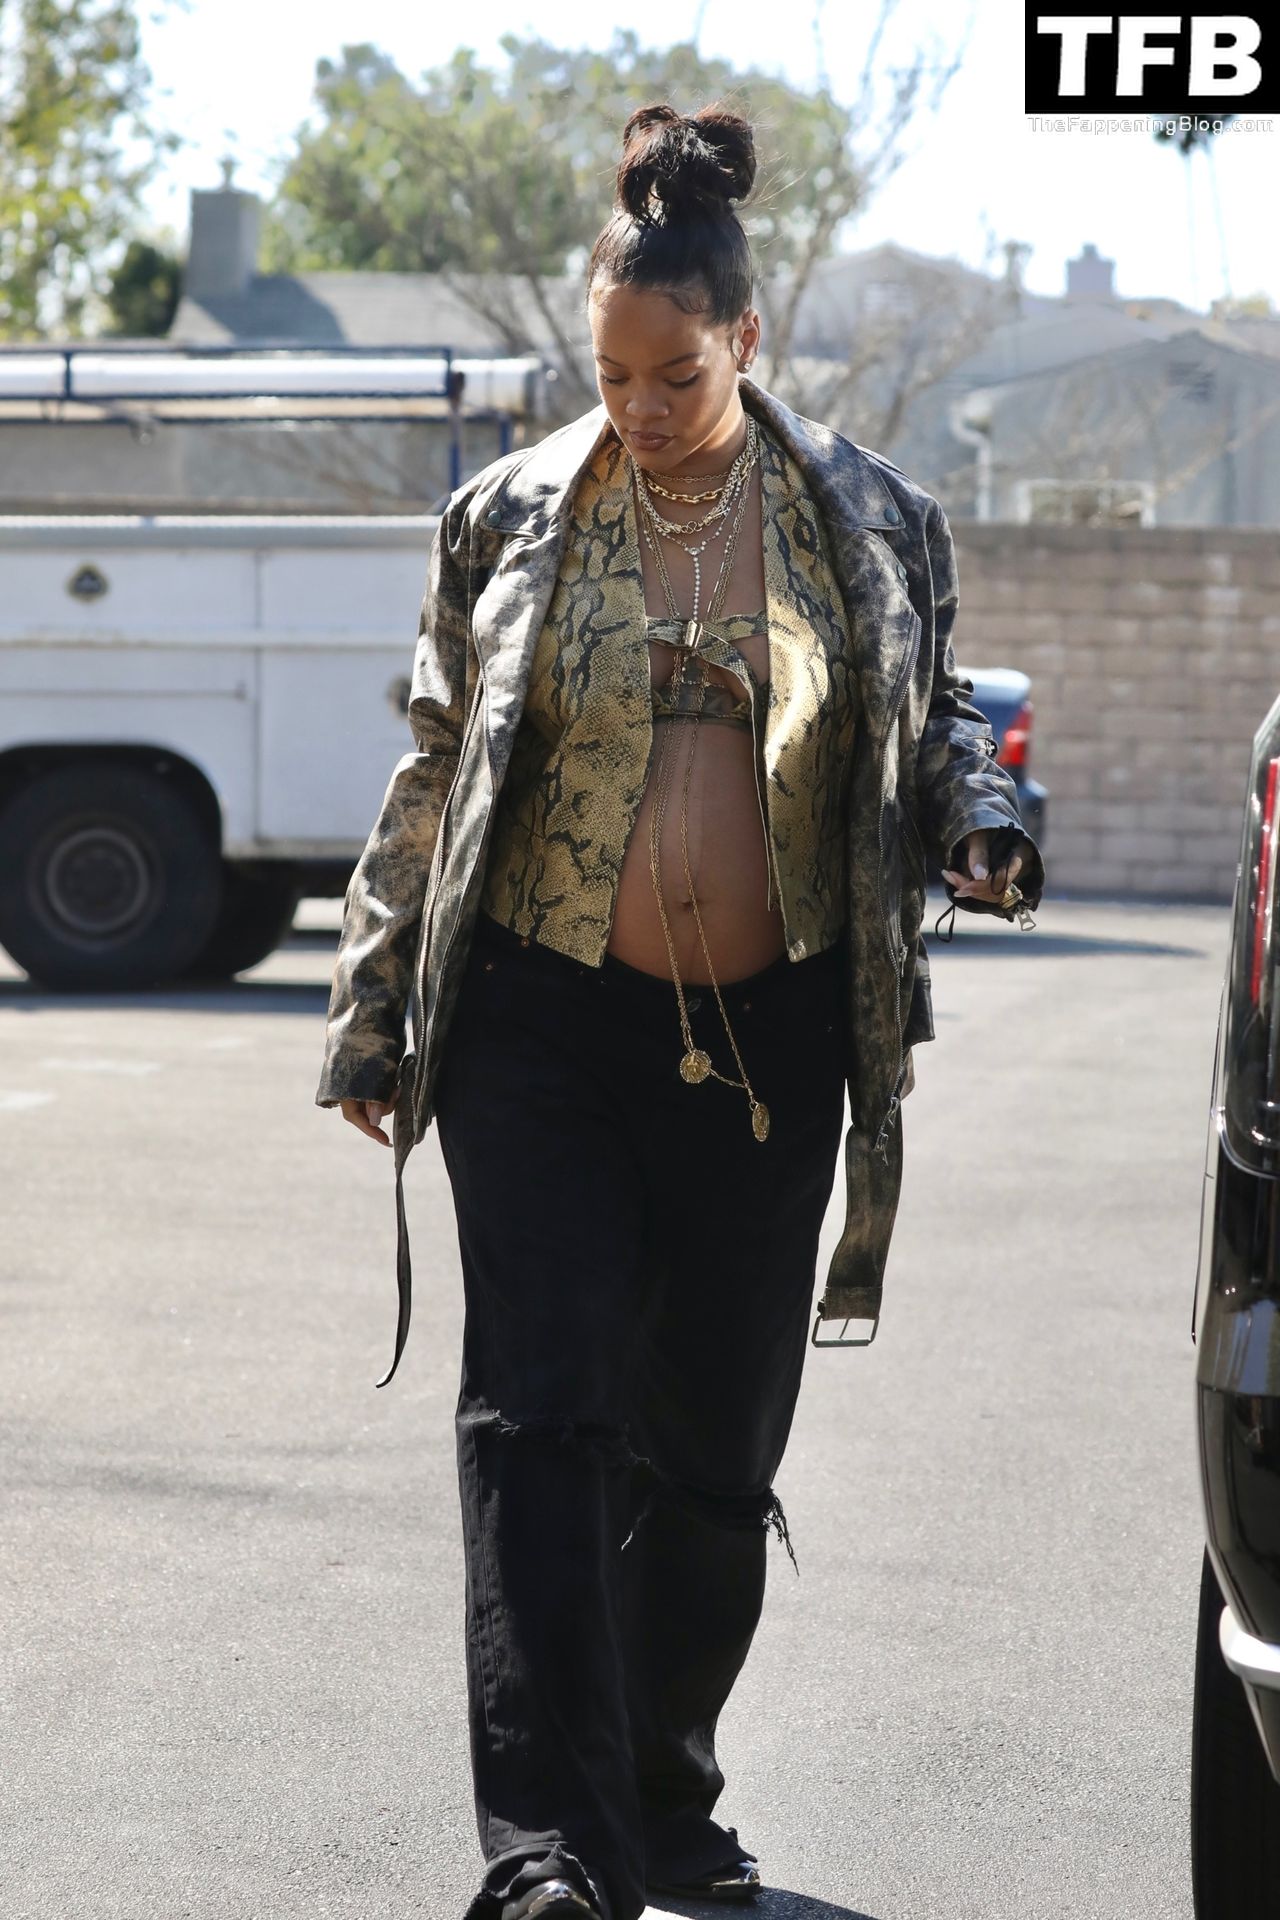 Rihanna-Sexy-The-Fappening-Blog-44-2.jpg